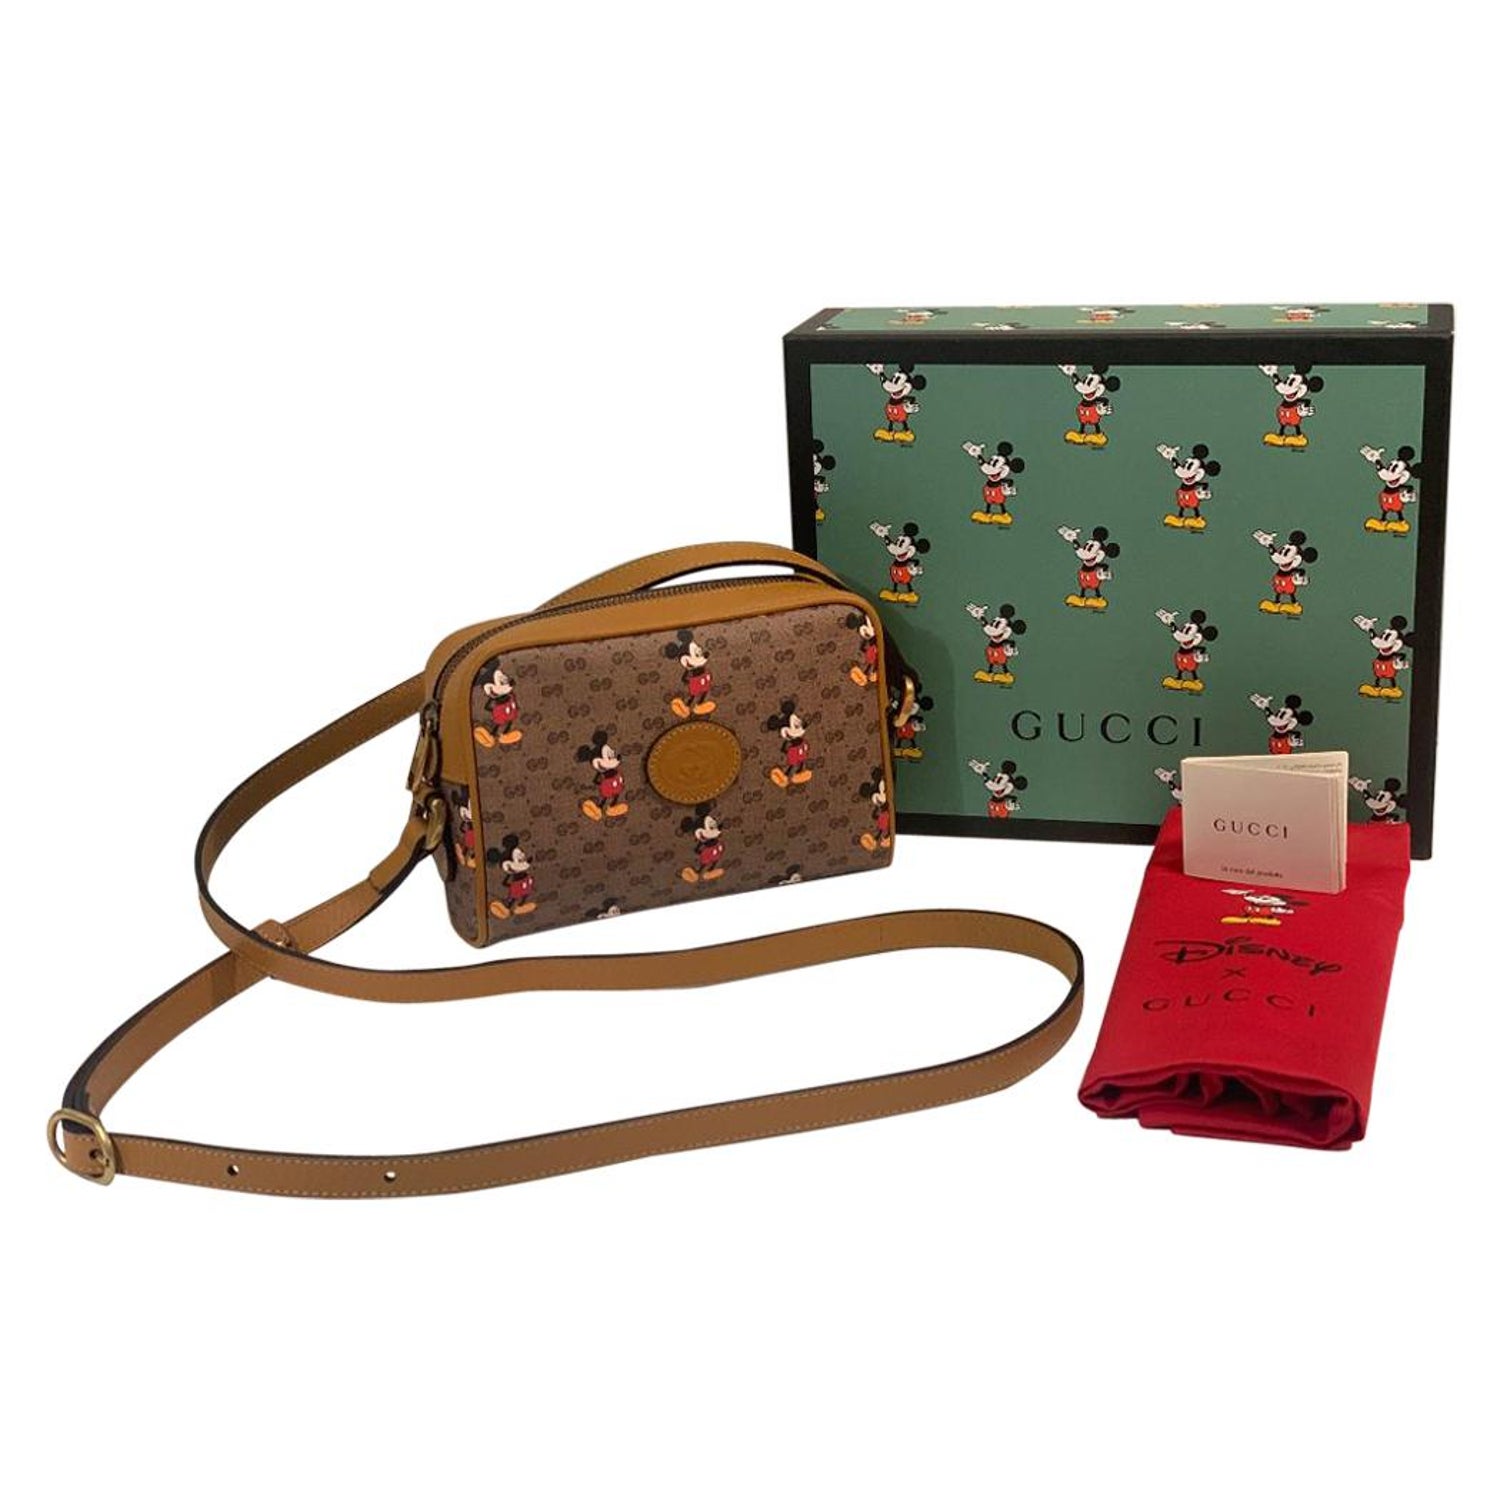 Gucci X Disney Bag - 2 For Sale on 1stDibs